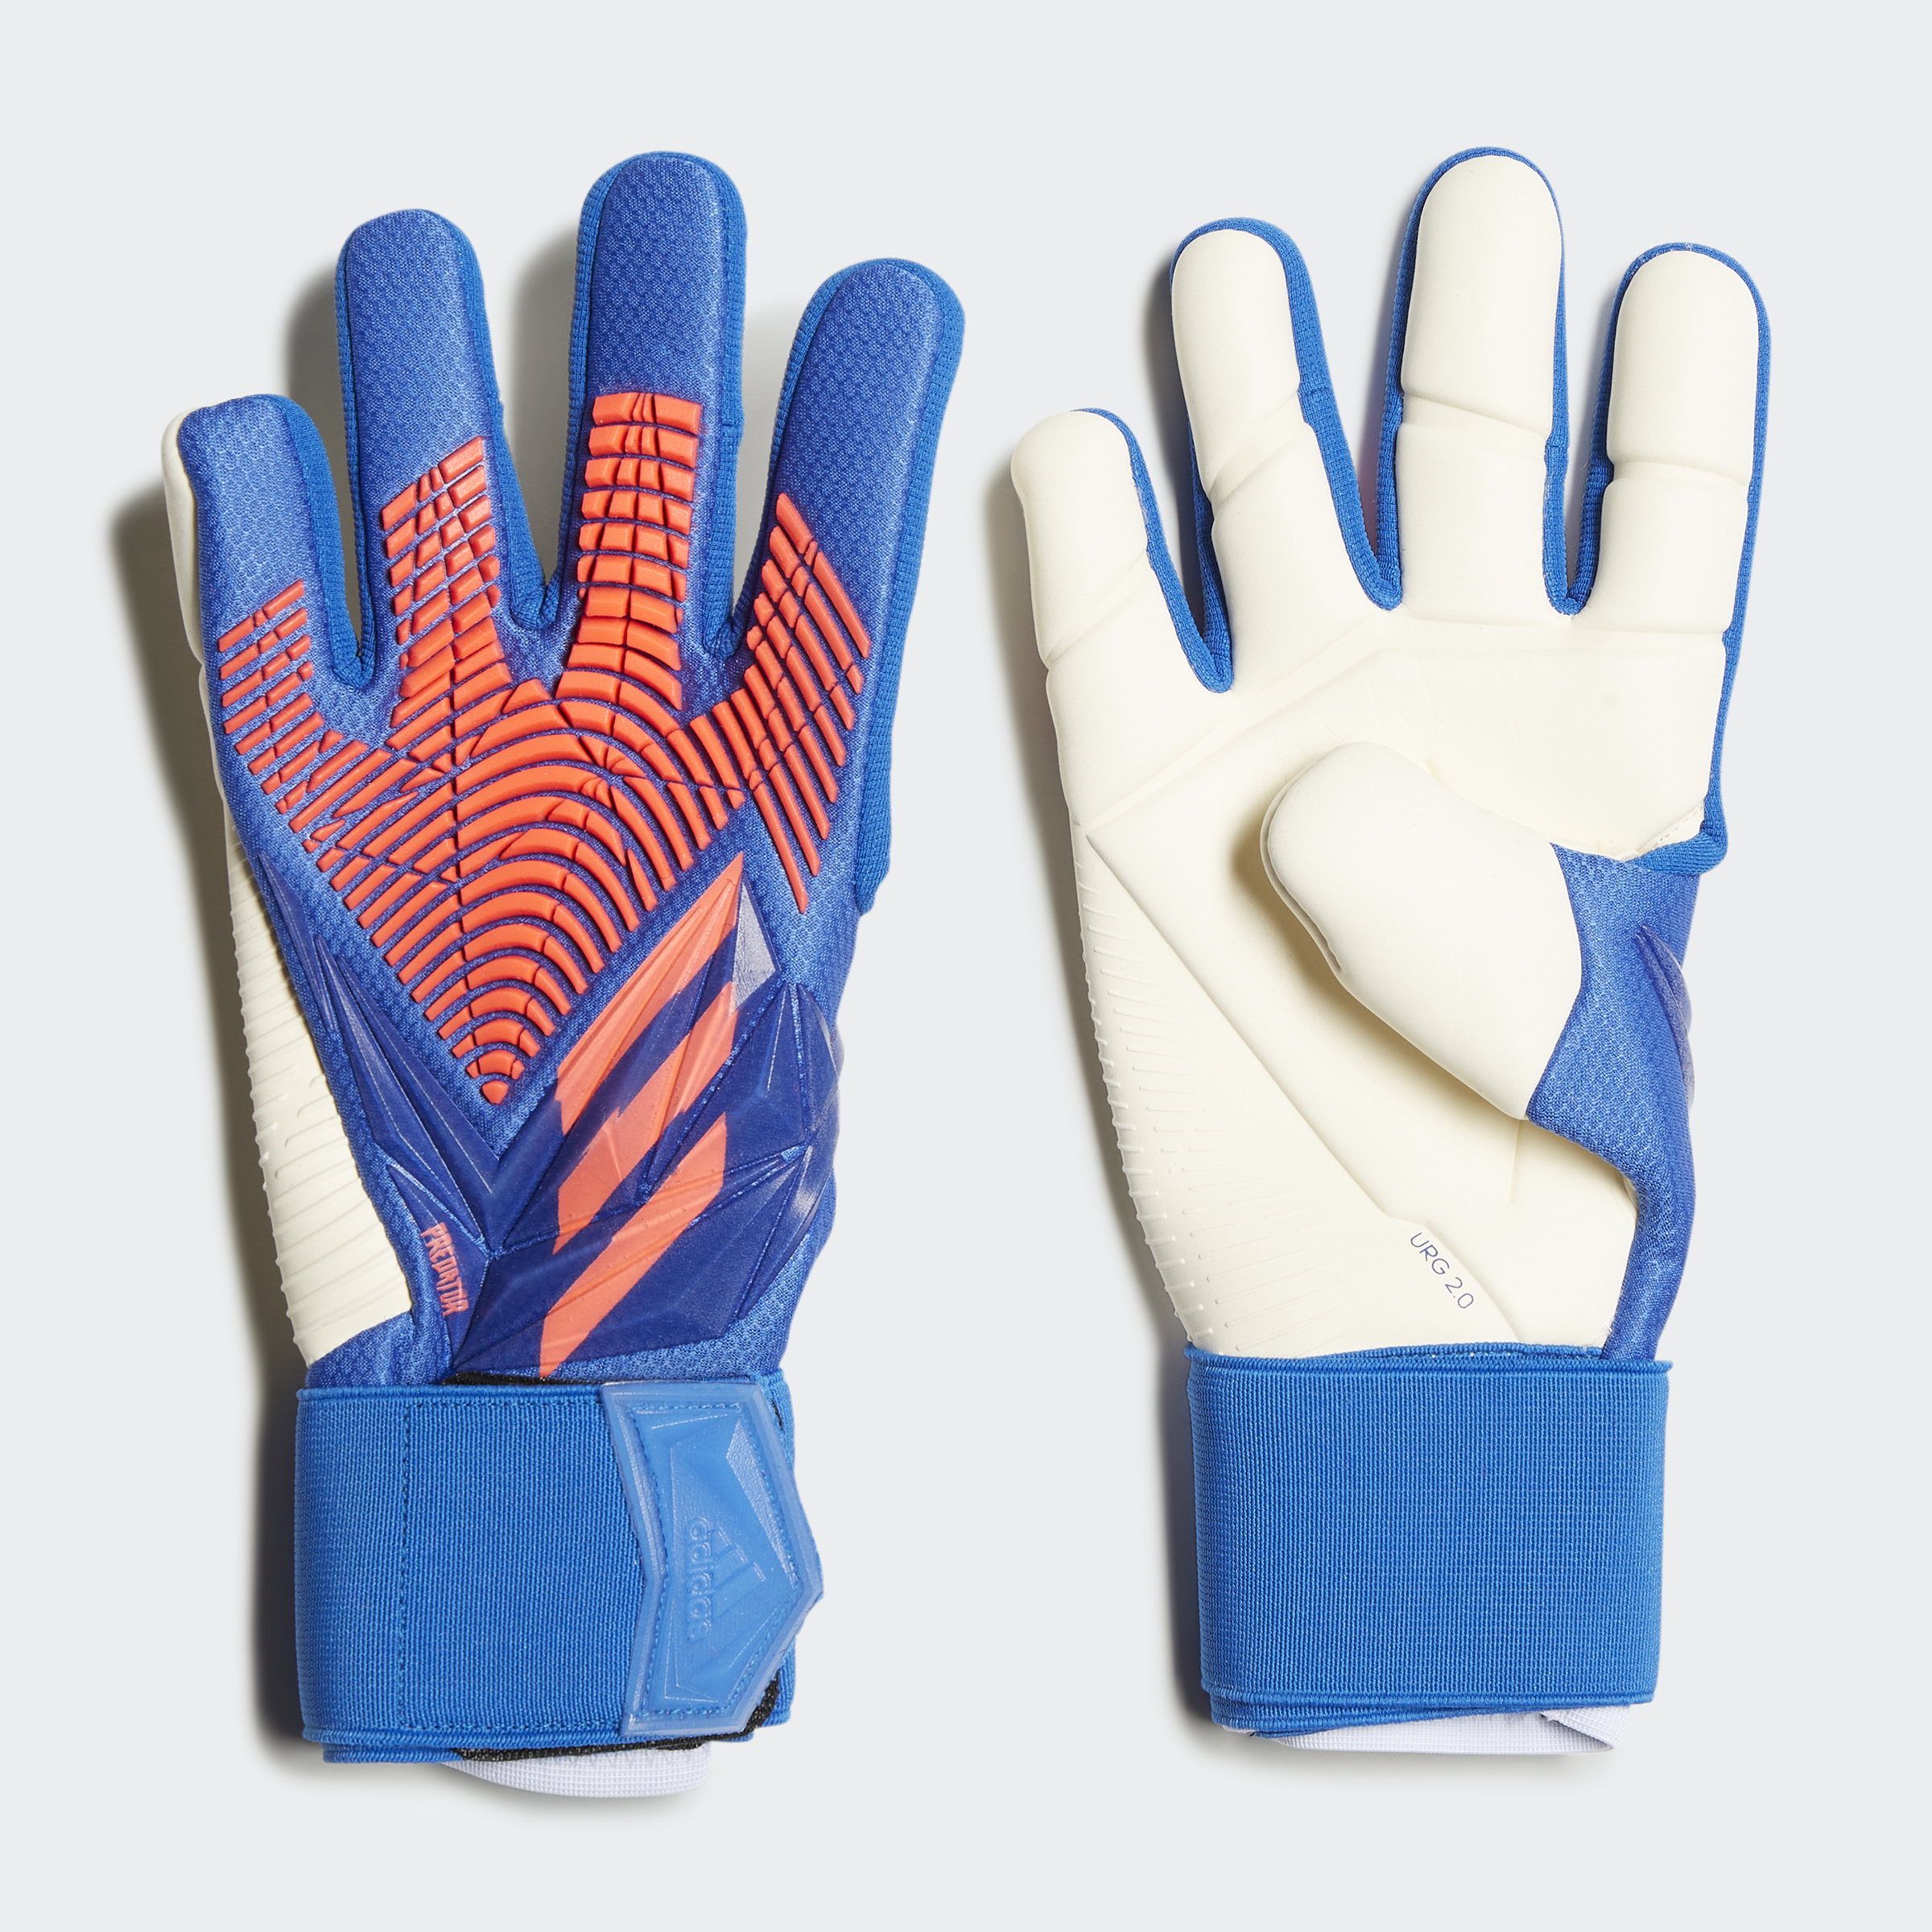 Адидас предатор перчатки. Adidas Predator Pro goalkeeper Gloves. Вратарские перчатки adidas Predator. Футбольные перчатки адидас предатор. Вратарские перчатки adidas pred gl Pro Jr (ss21).